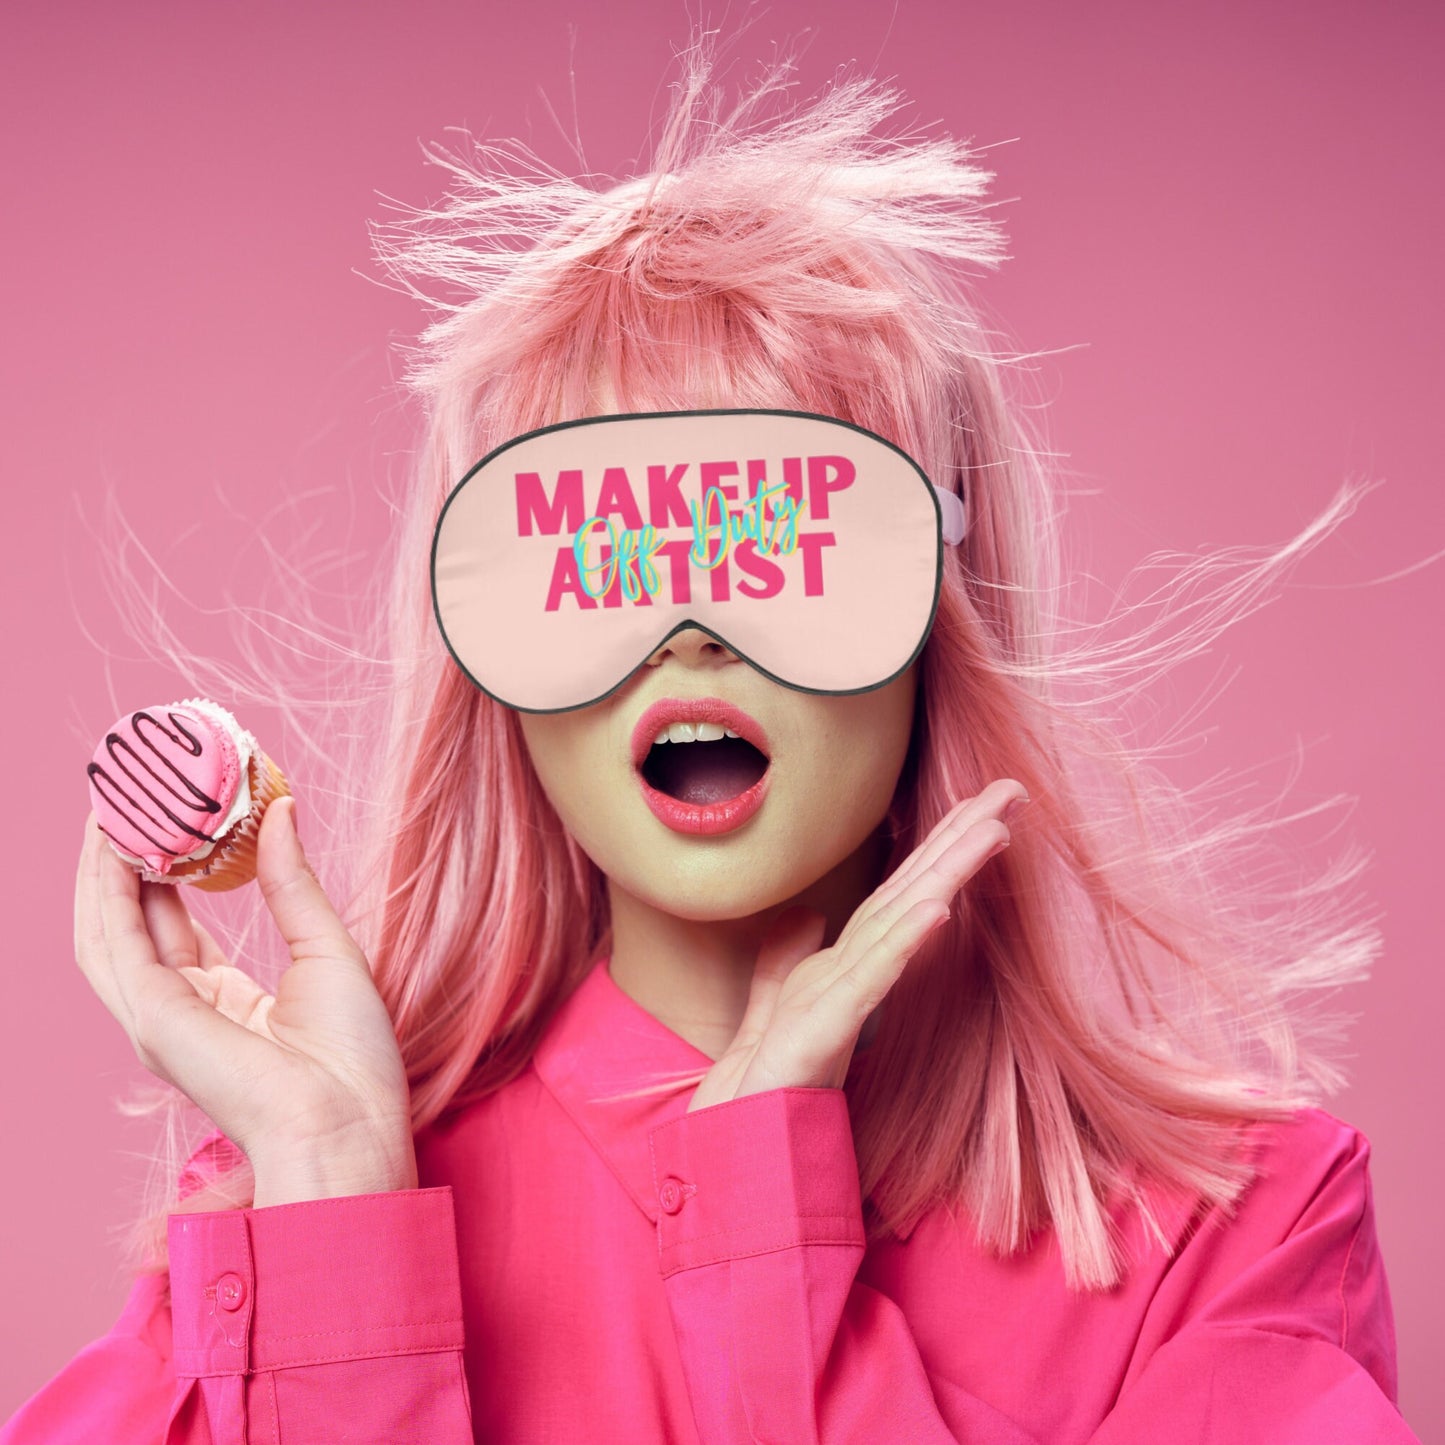 Makeup Artist Sleep Mask Satin Eye Mask Face Cover Travel Kit Cosmetics Accessories MUA Gifts Retro y2k 90s Pink Black White Sleeping Mask